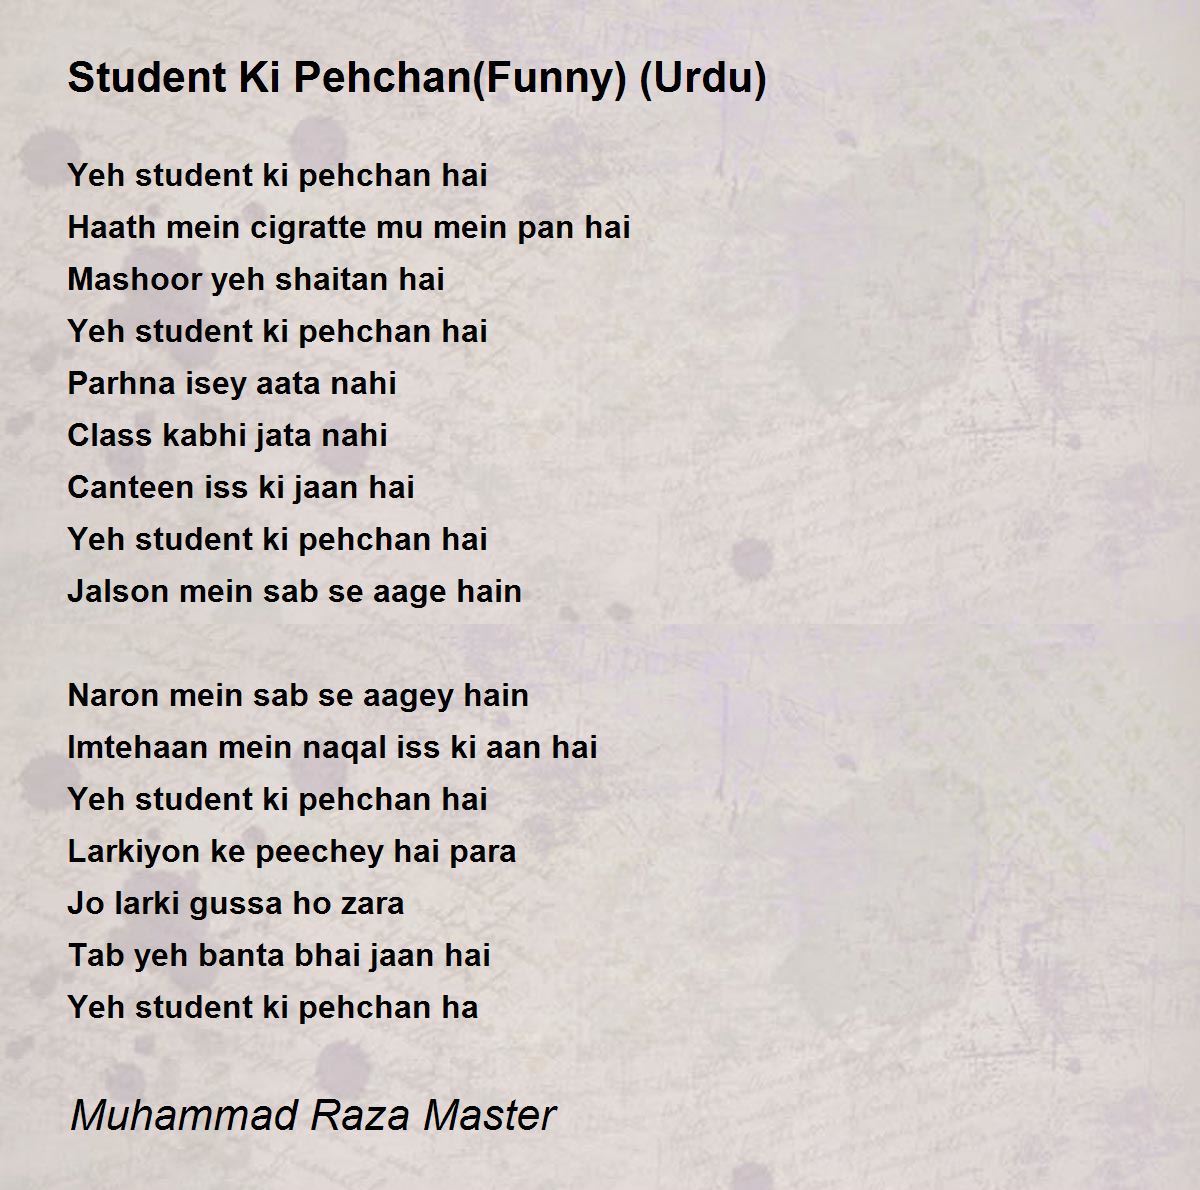 Student Ki Pehchan Funny Urdu